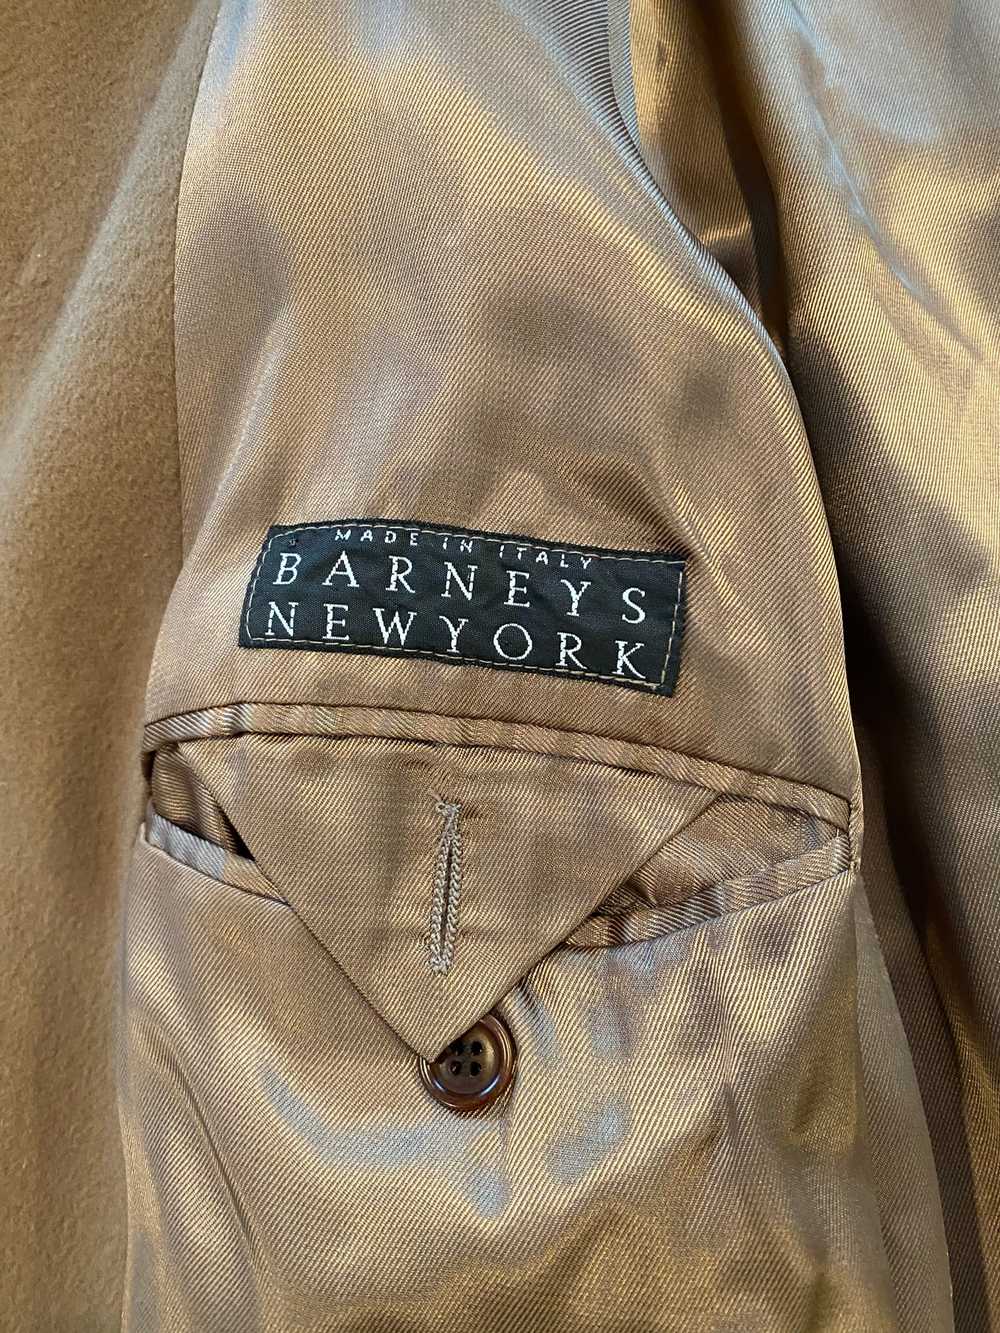 Barneys New York Camel Wool Overcoat - image 4